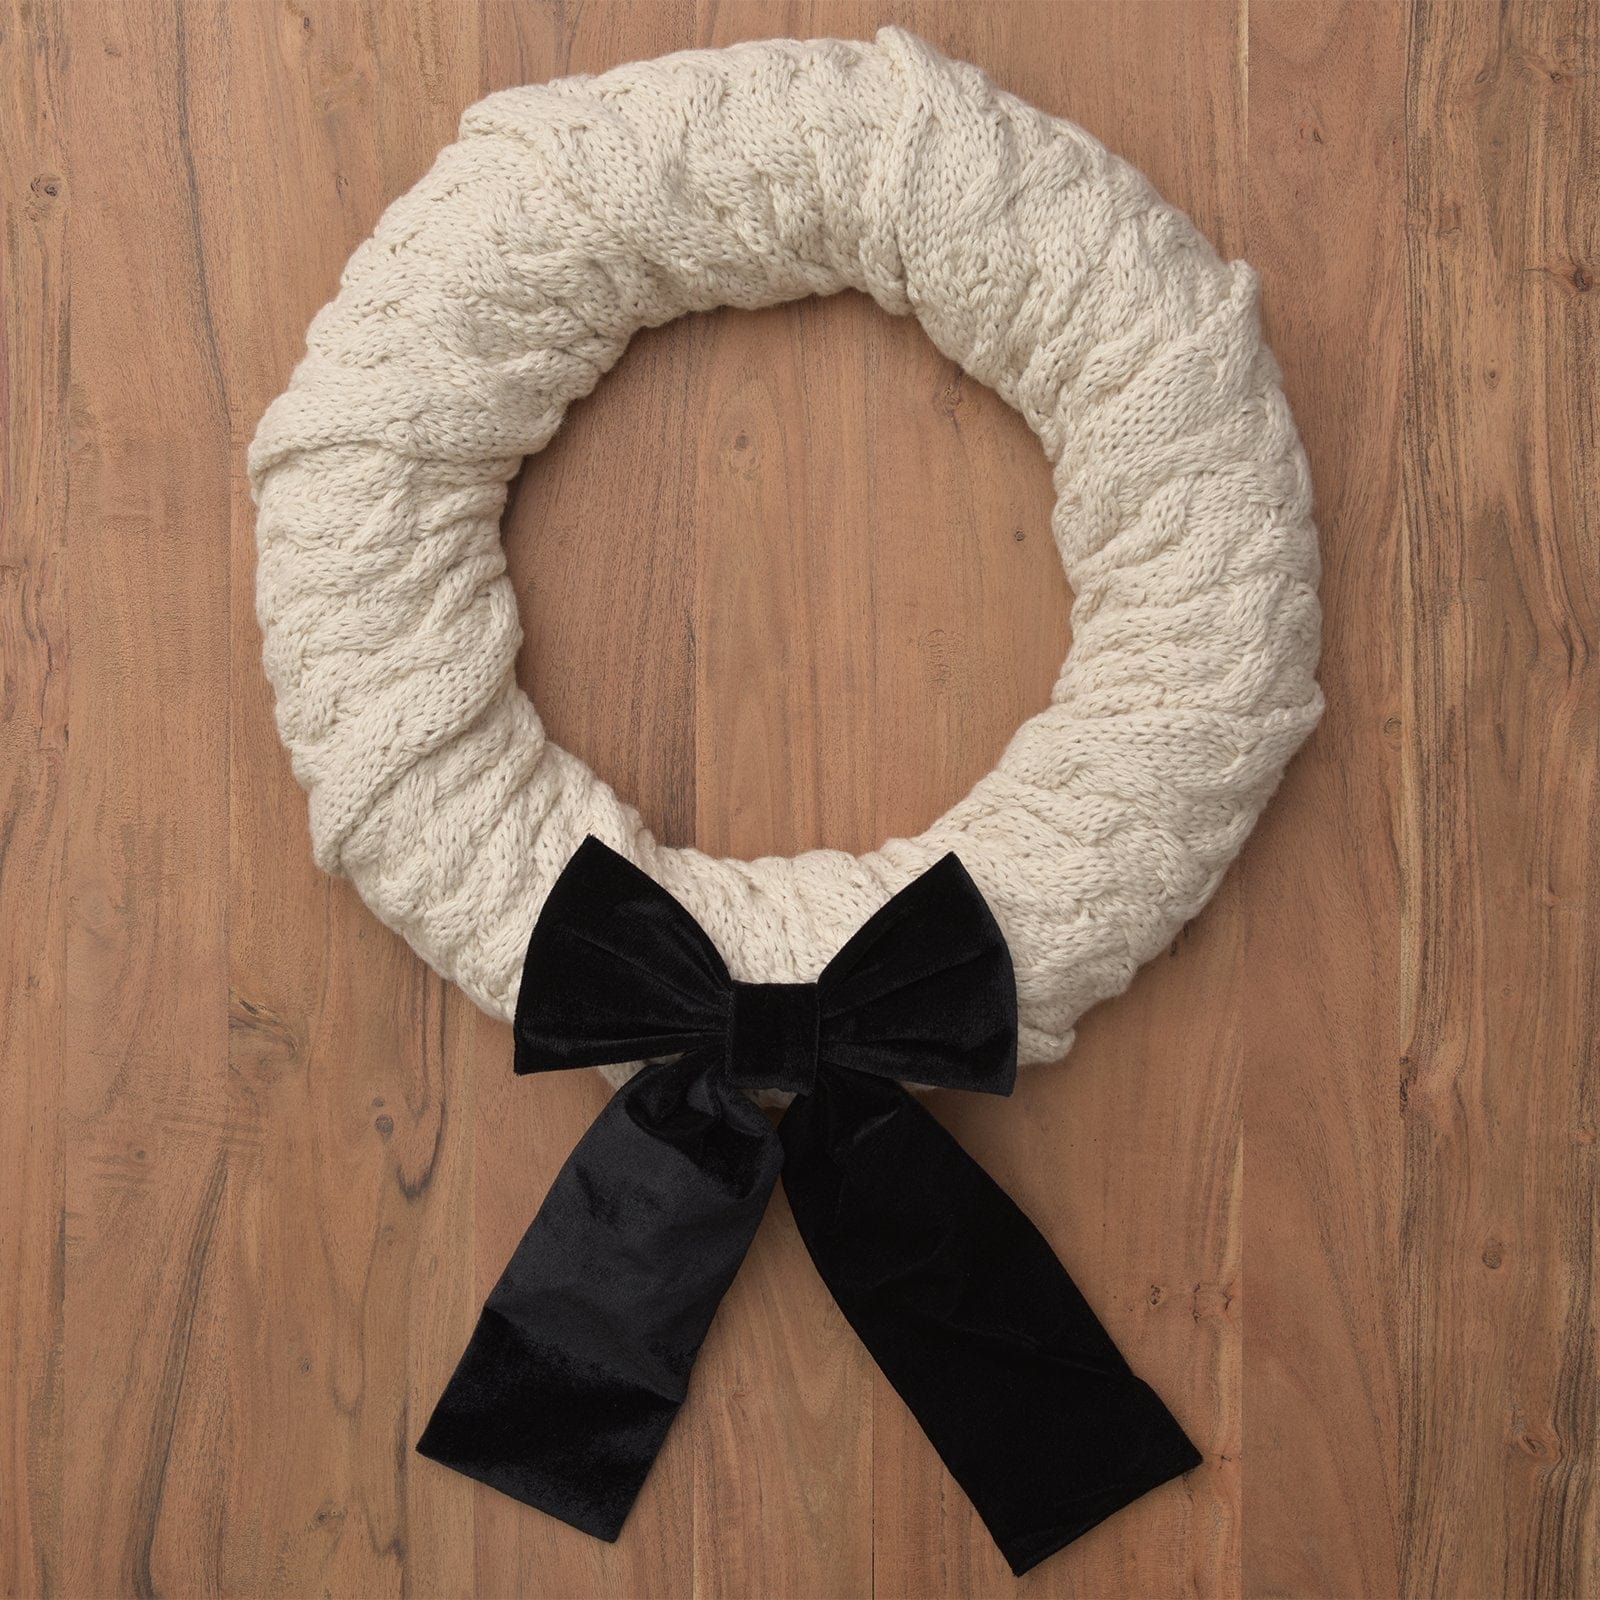 Sweater Knit Wreath Gartner Studios Wreath 42278